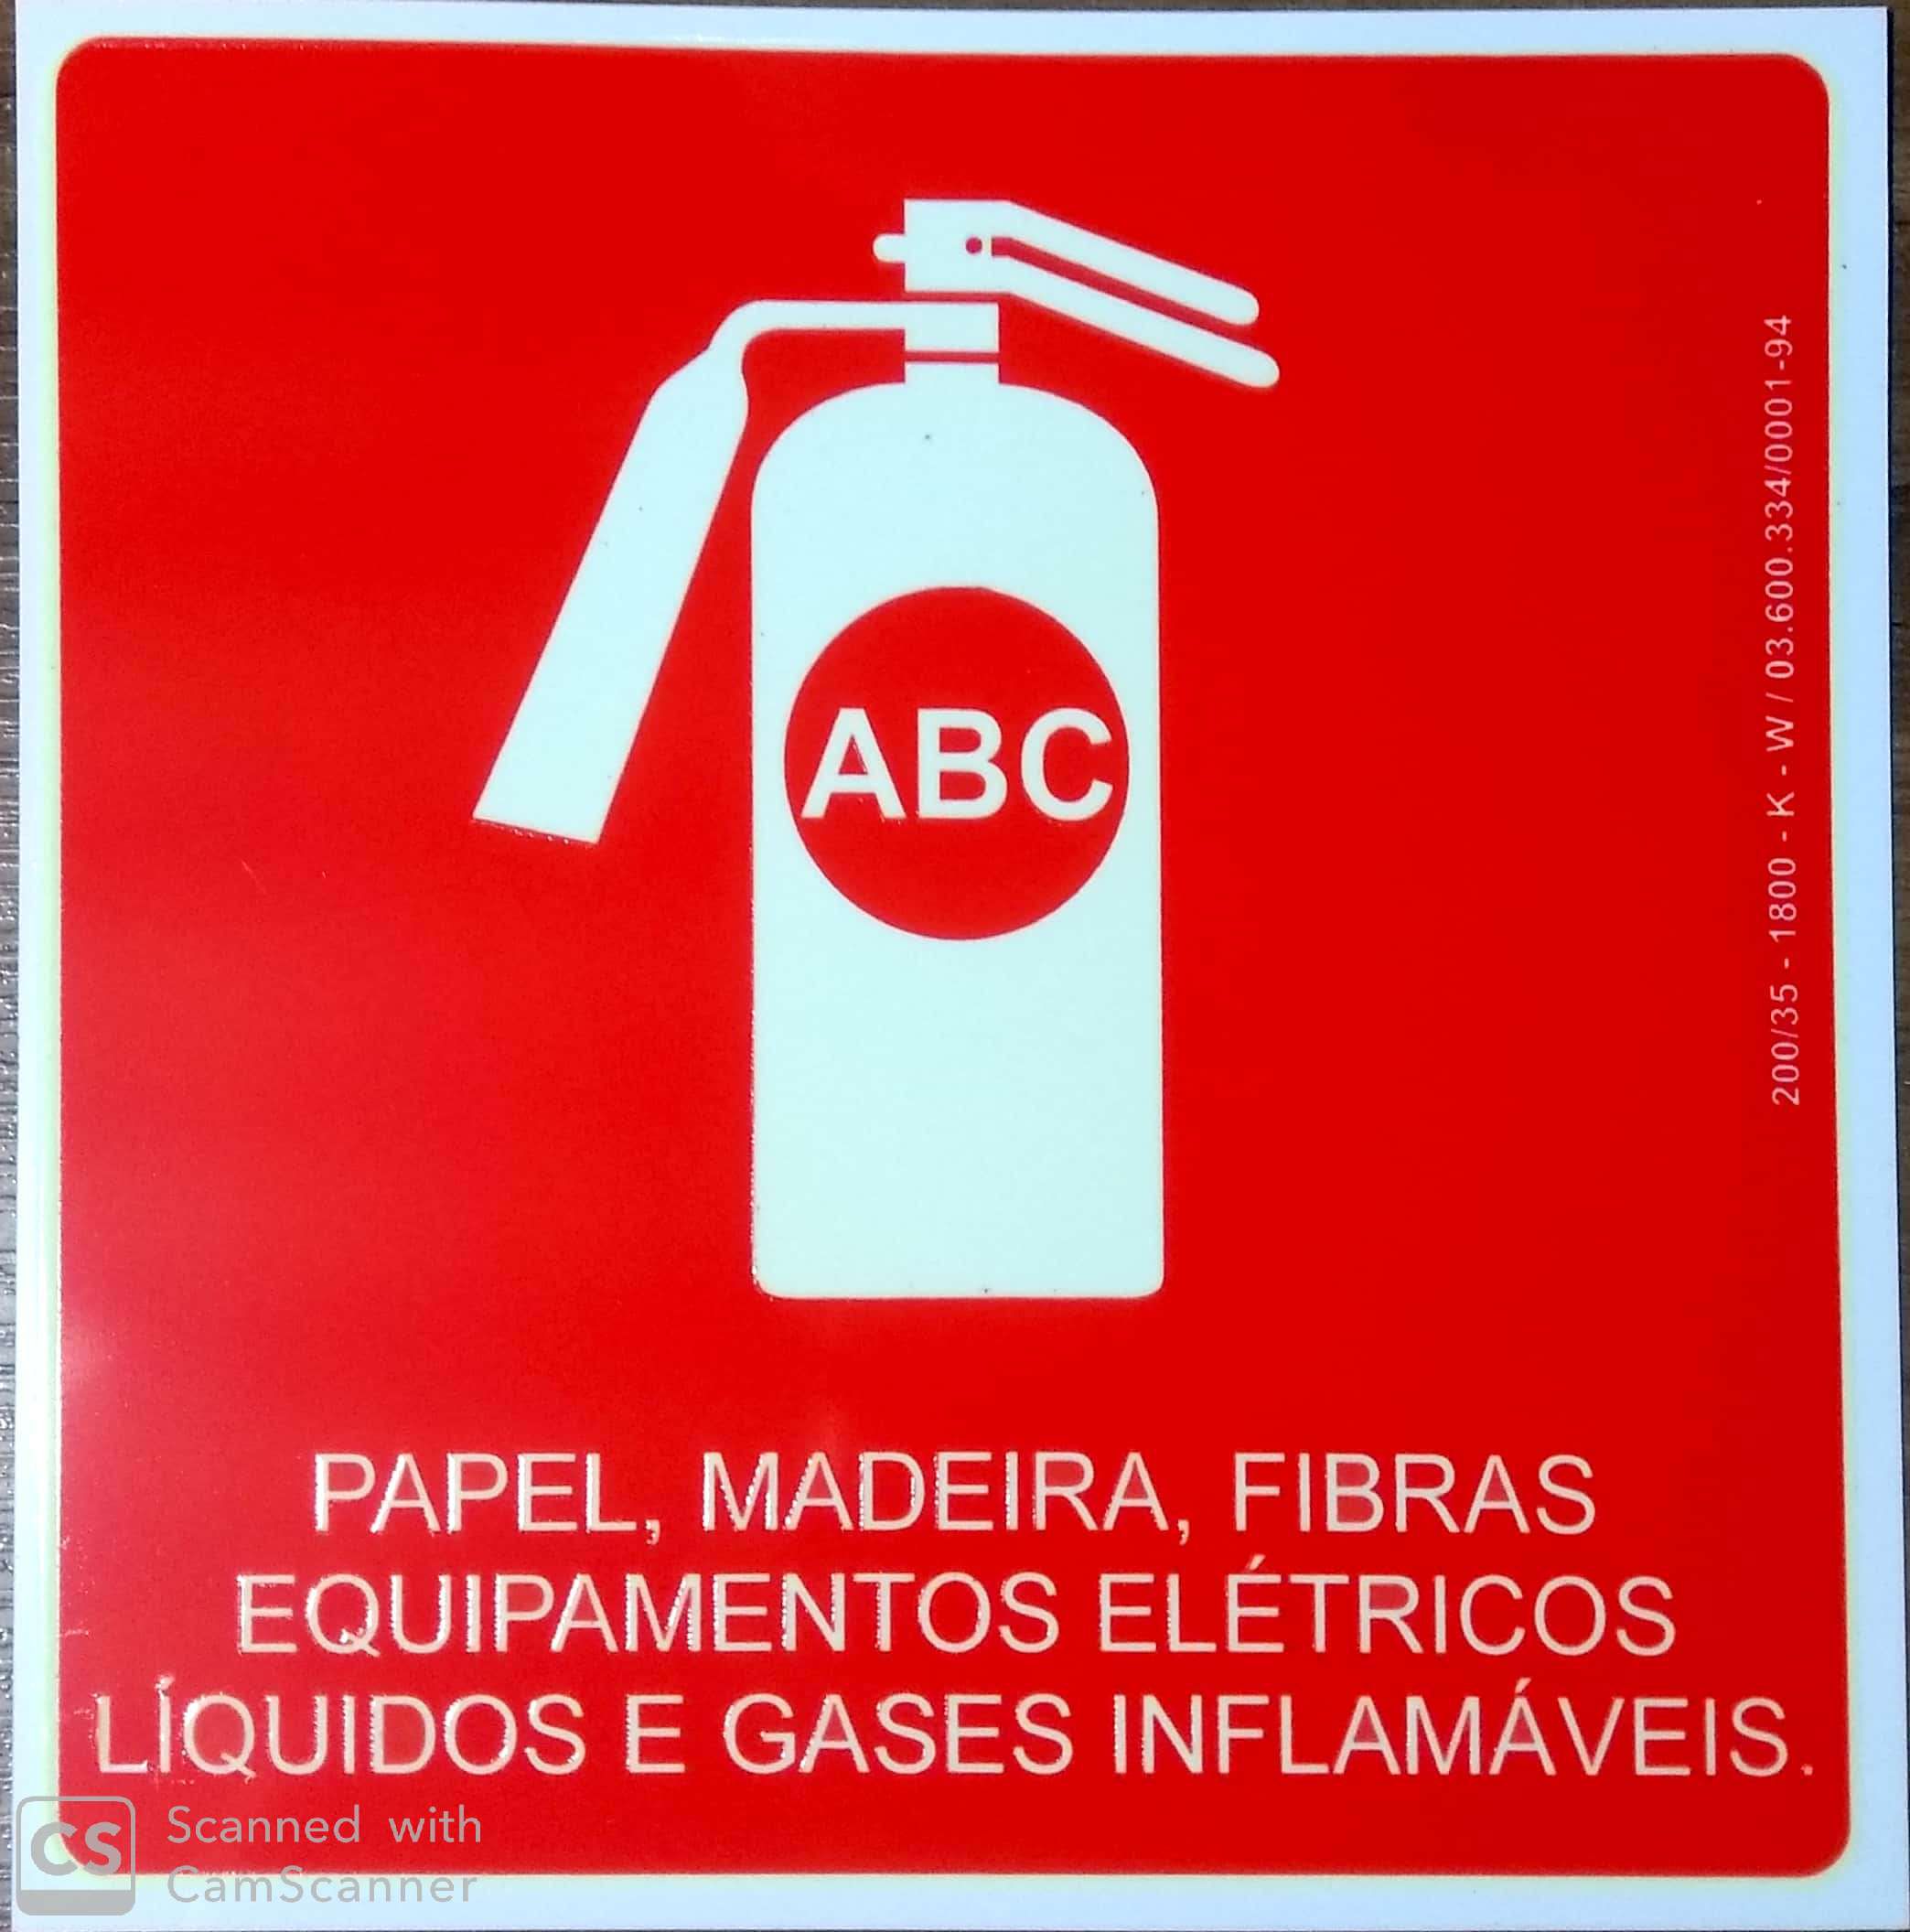 PLACA INDICATIVA DE EXTINTOR PÓ ABC - R&A Extintores